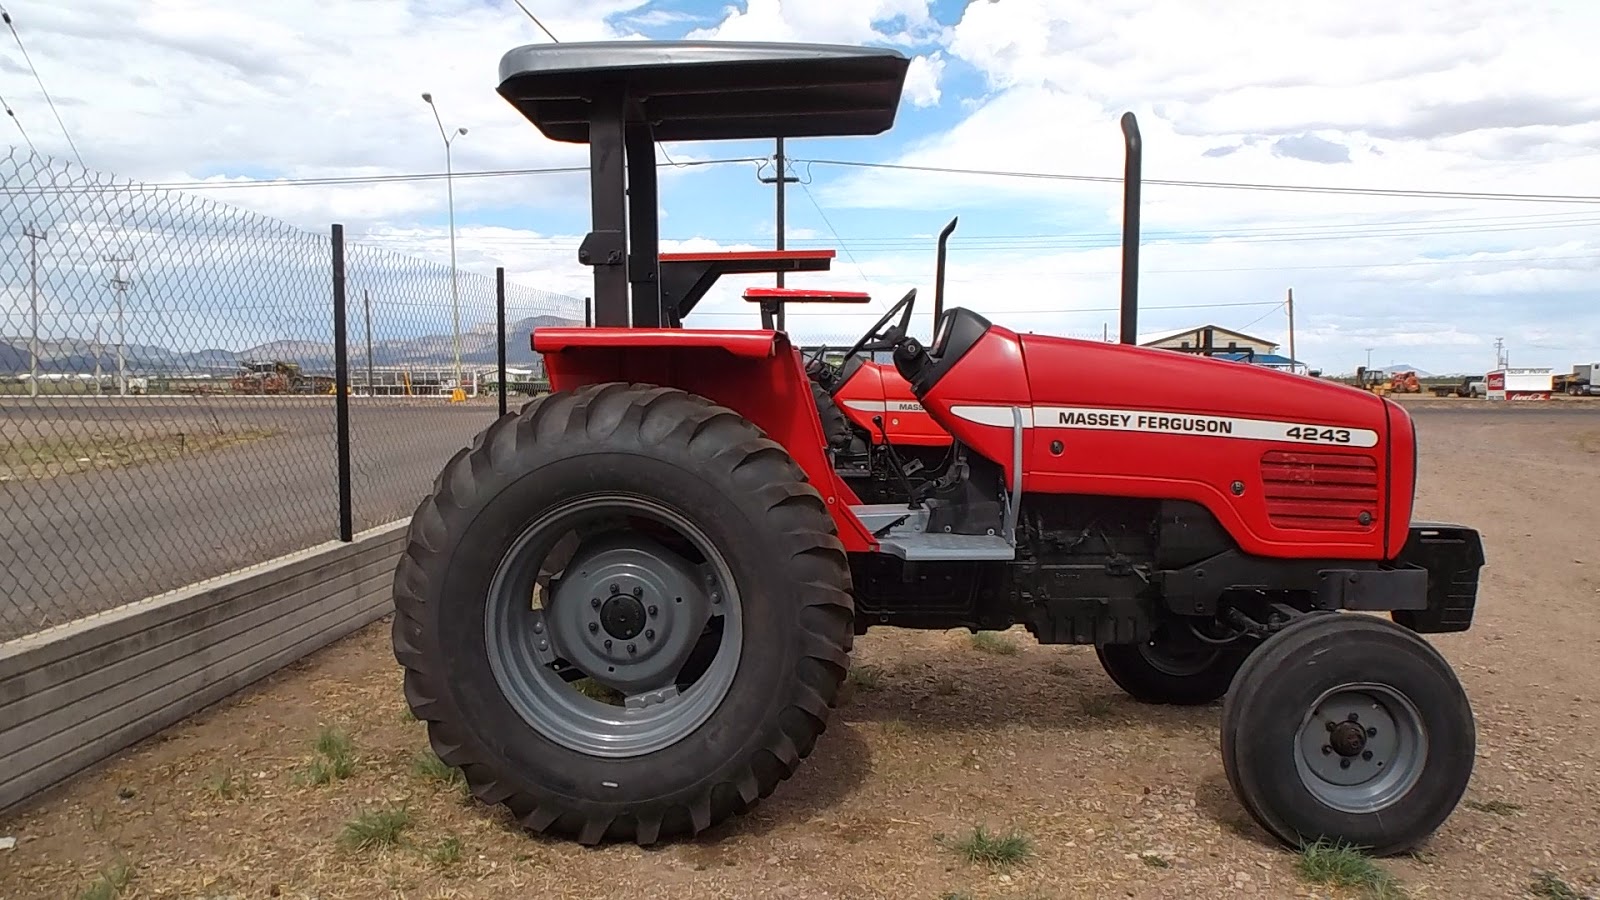 MAQUINARIA AGRICOLA INDUSTRIAL: Tractor Massey Ferguson 4243 $15,500 ...